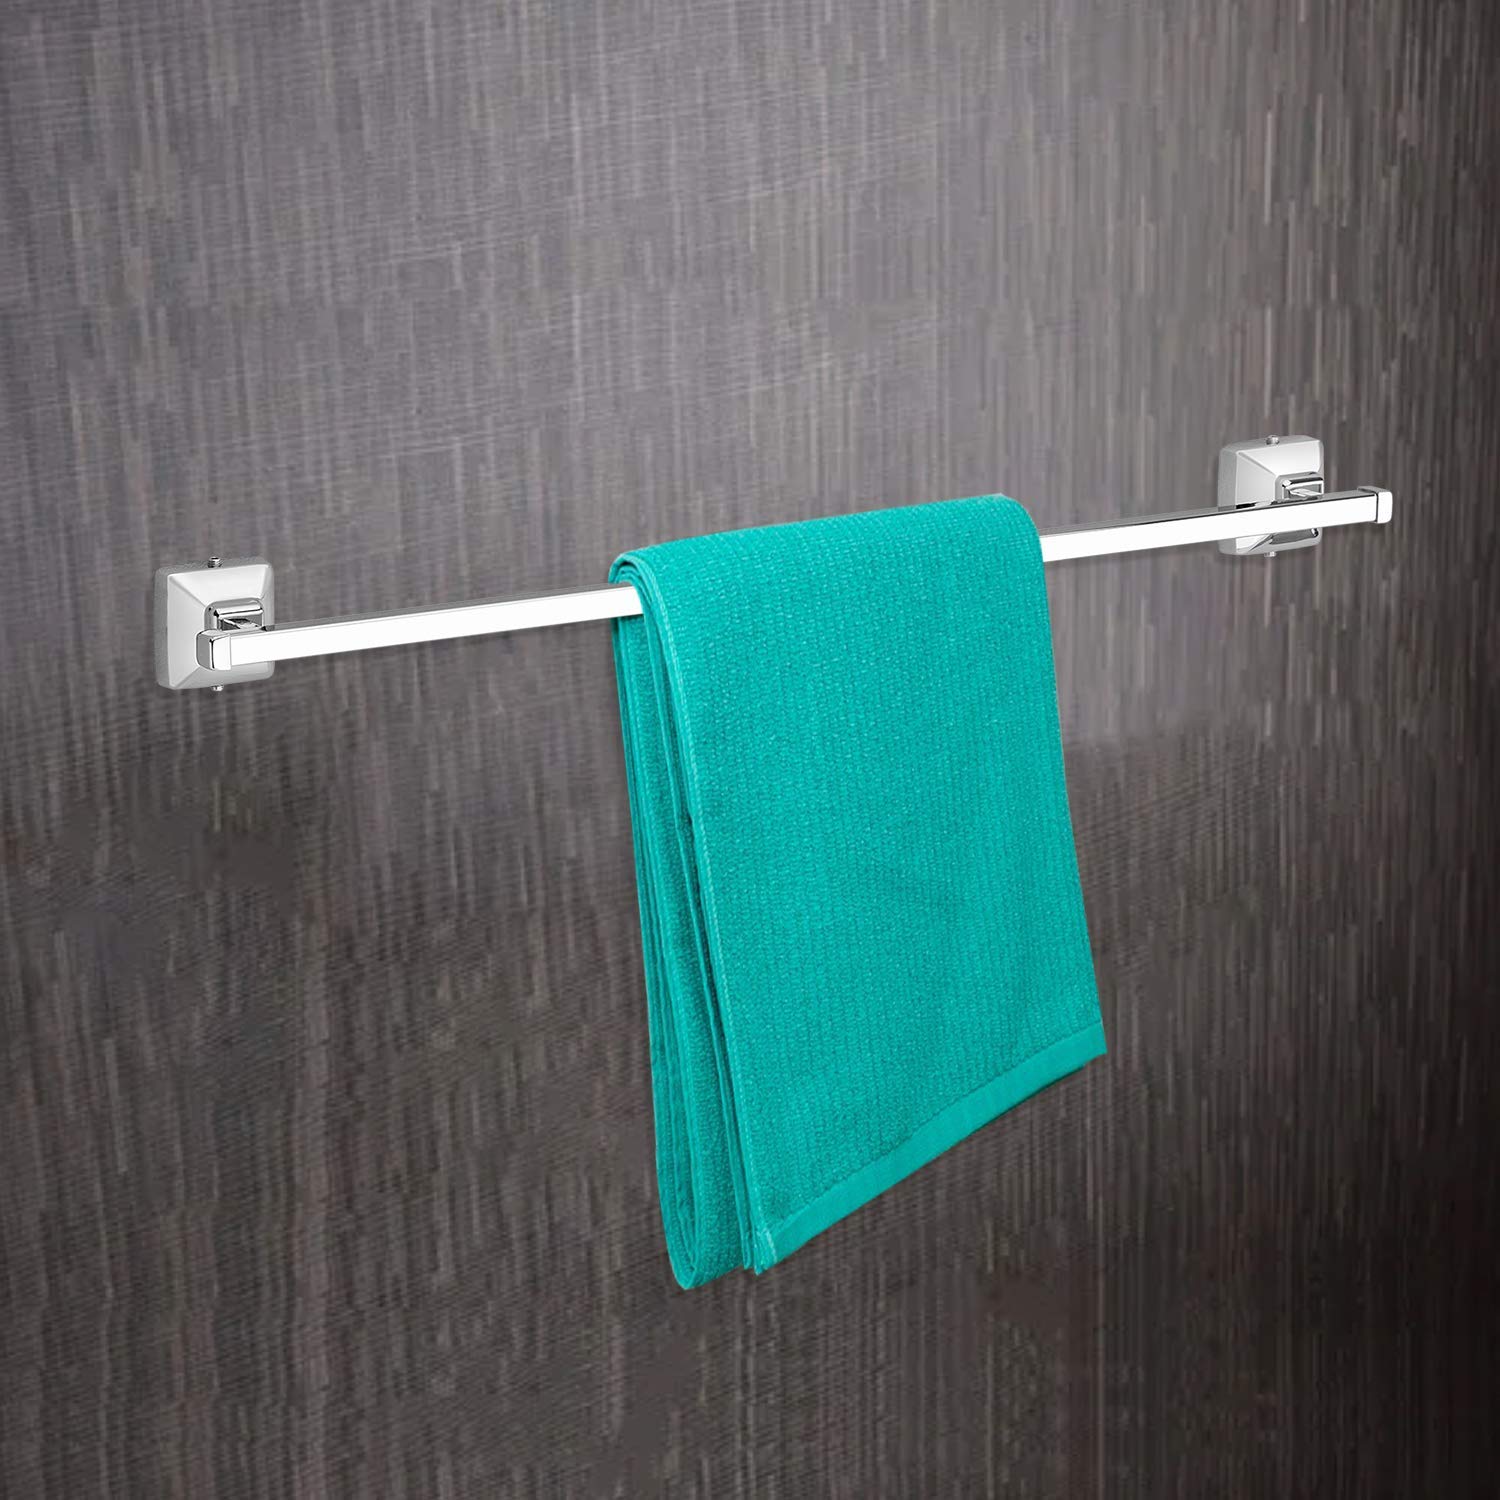 Plantex Stainless Steel 304 Grade Squaro Towel Hanger for Bathroom/Towel Rod/Bar/Bathroom Accessories(24inch-Chrome) - Pack of 3